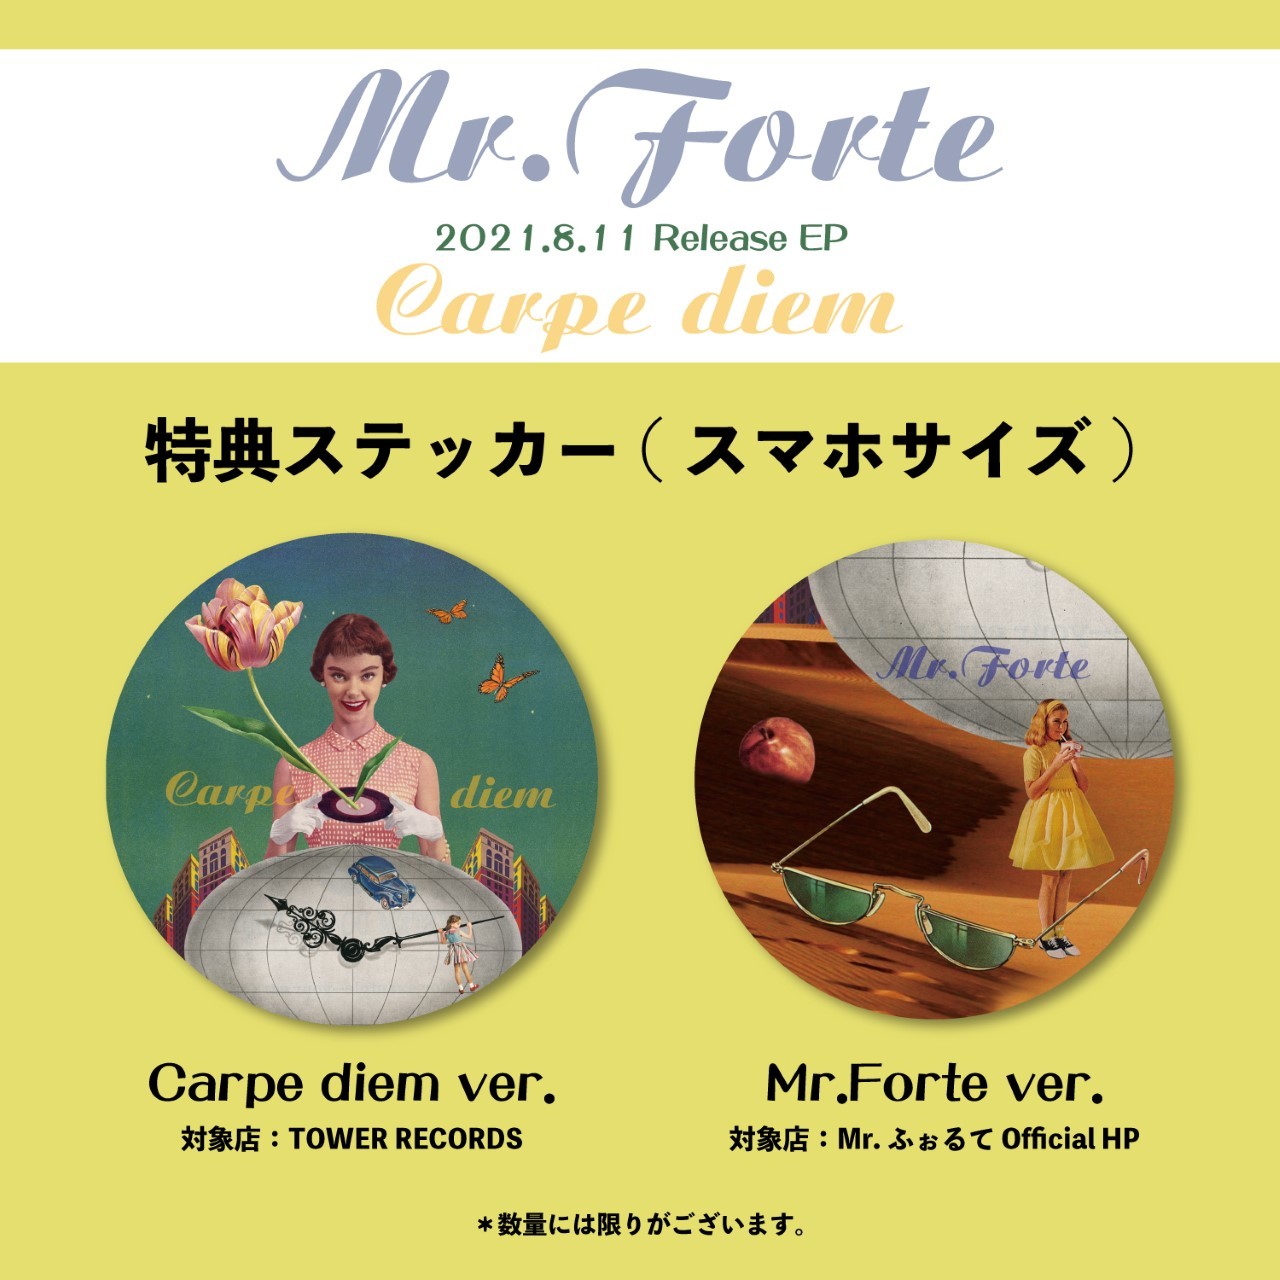 Mr.ふぉるて、新作EP『Carpe diem』付属DVDにリキッドルームワンマン